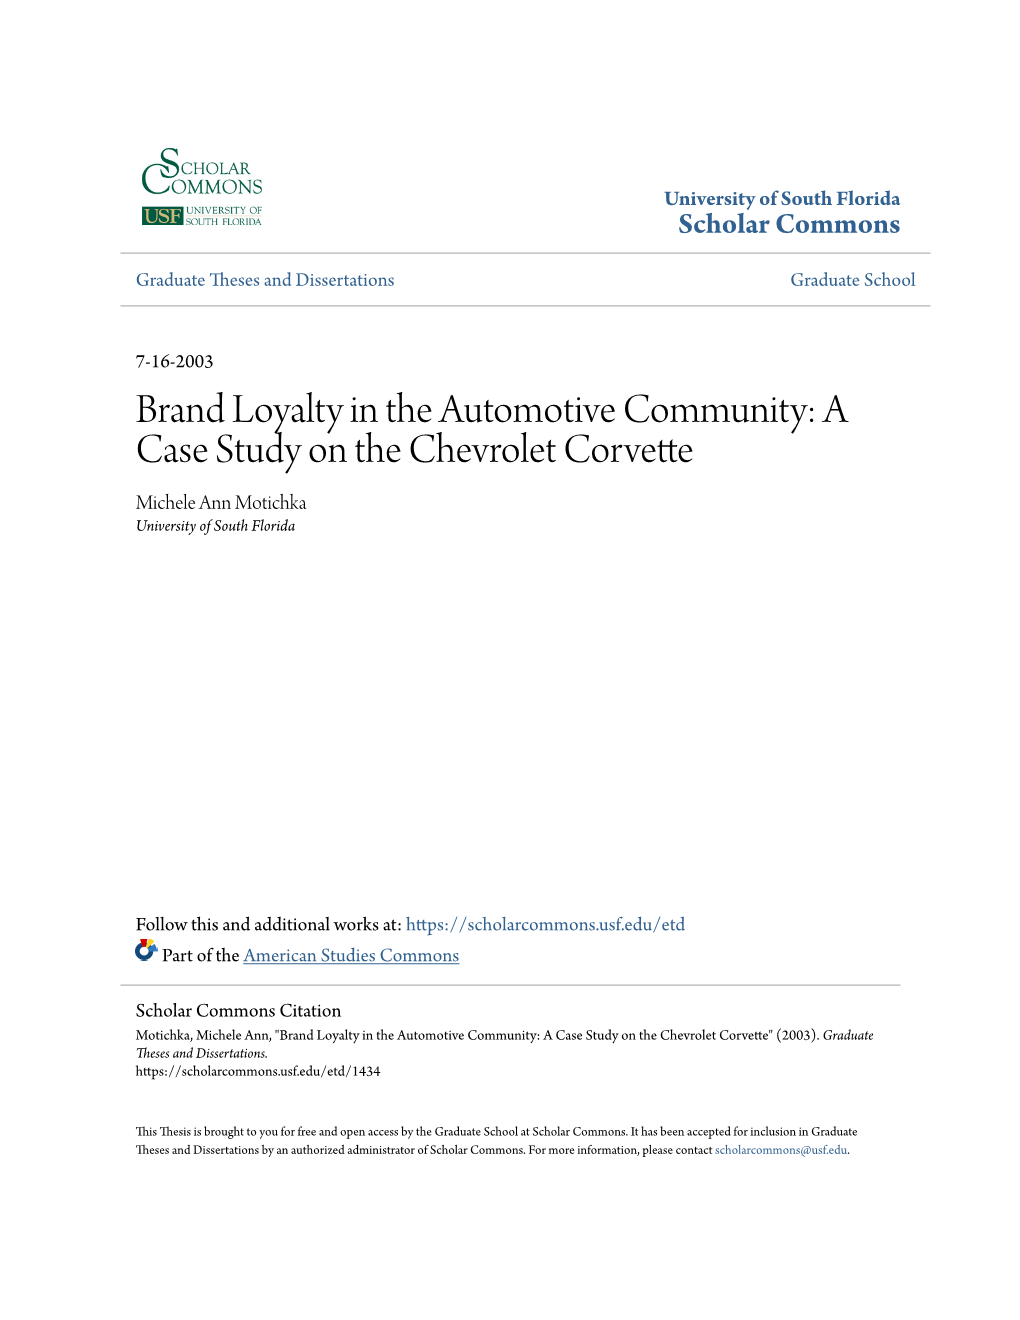 A Case Study on the Chevrolet Corvette Michele Ann Motichka University of South Florida